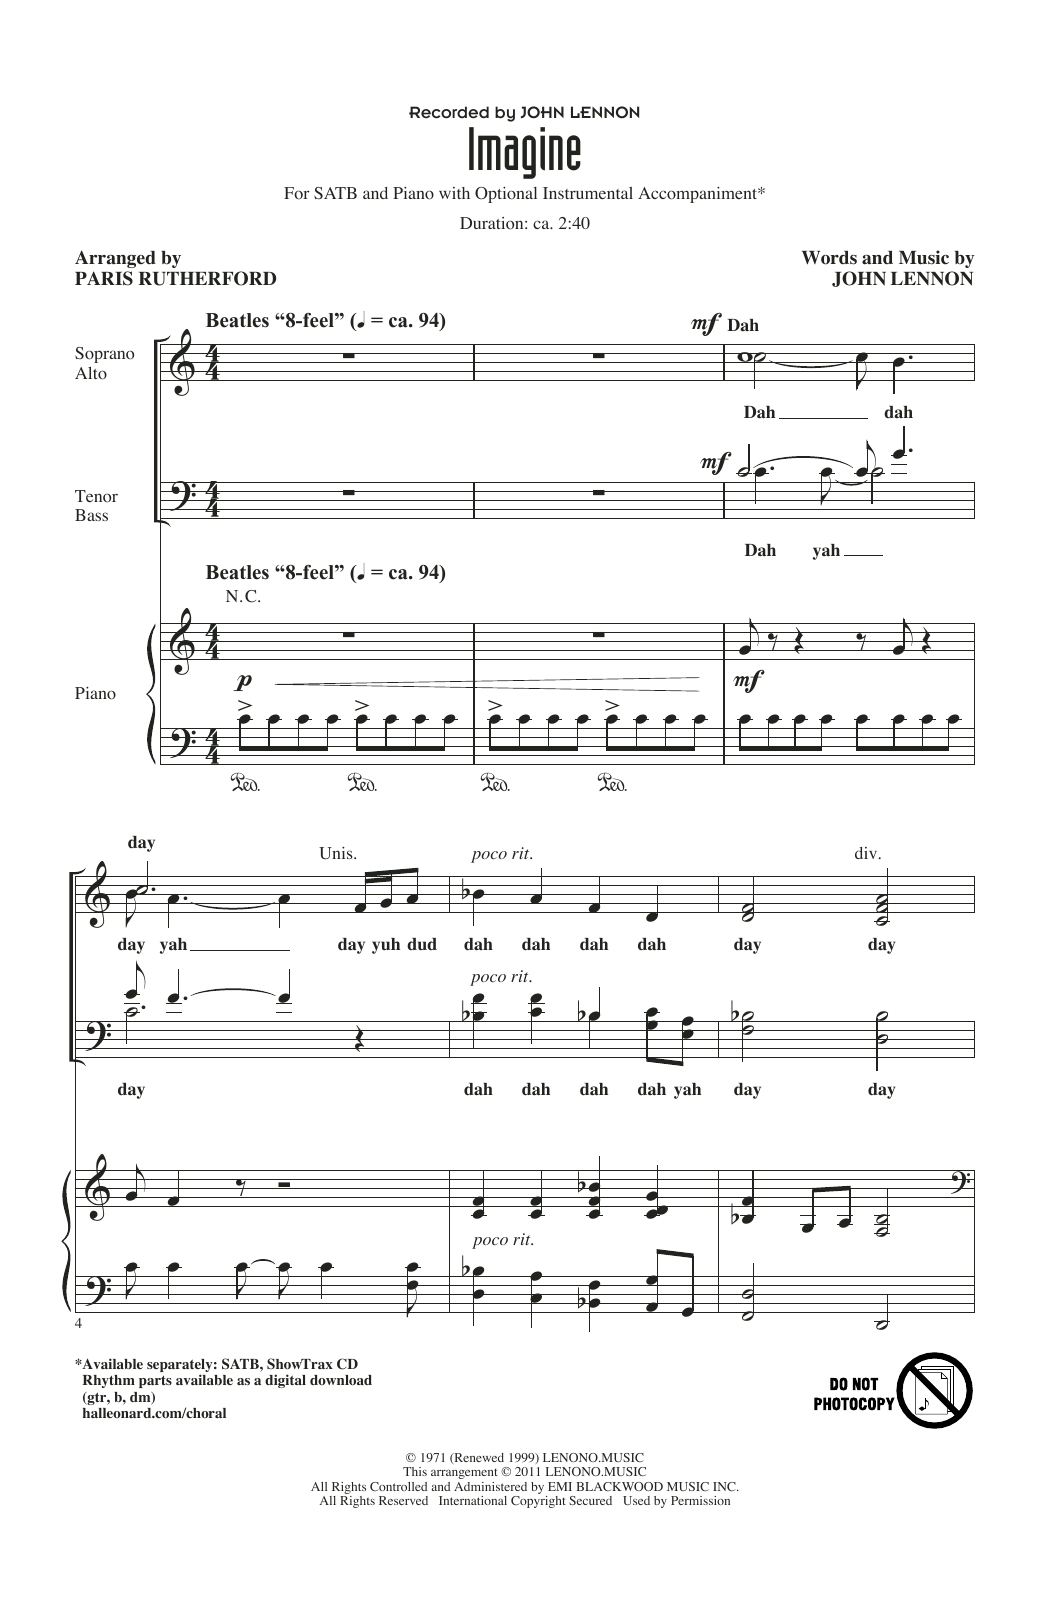 John Lennon Imagine (arr. Paris Rutherford) Sheet Music Notes & Chords for SATB - Download or Print PDF